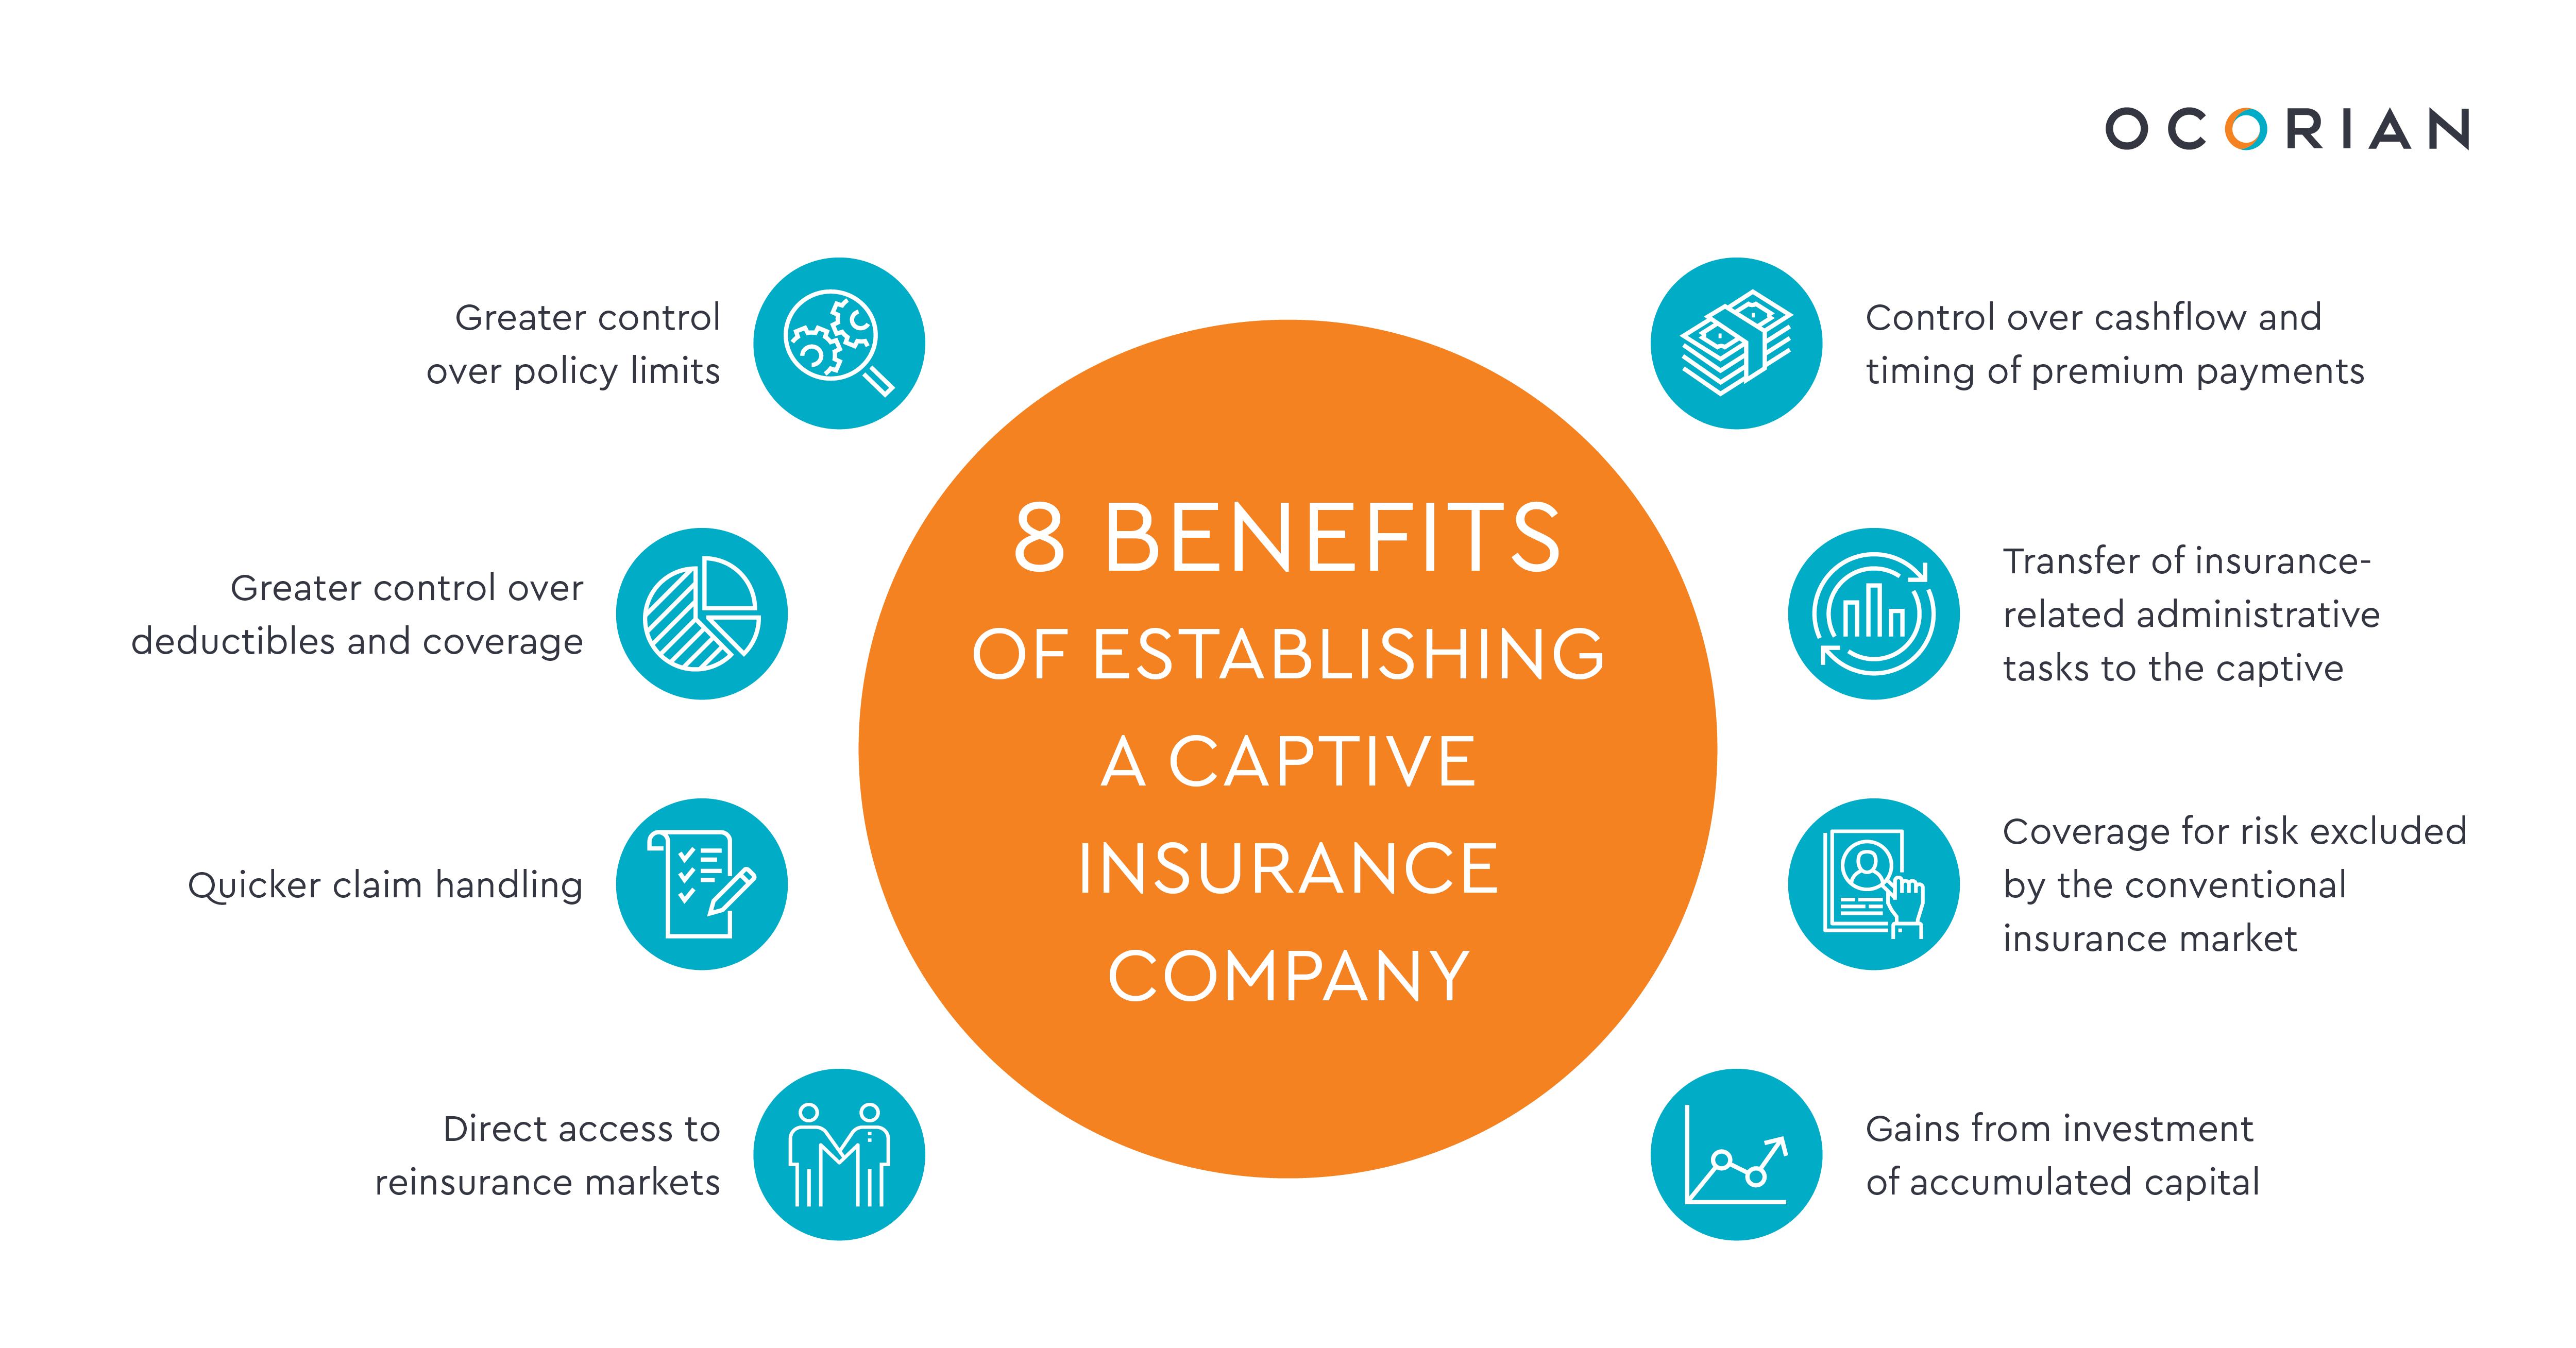 8 Benefits of establishing a captive insurance company